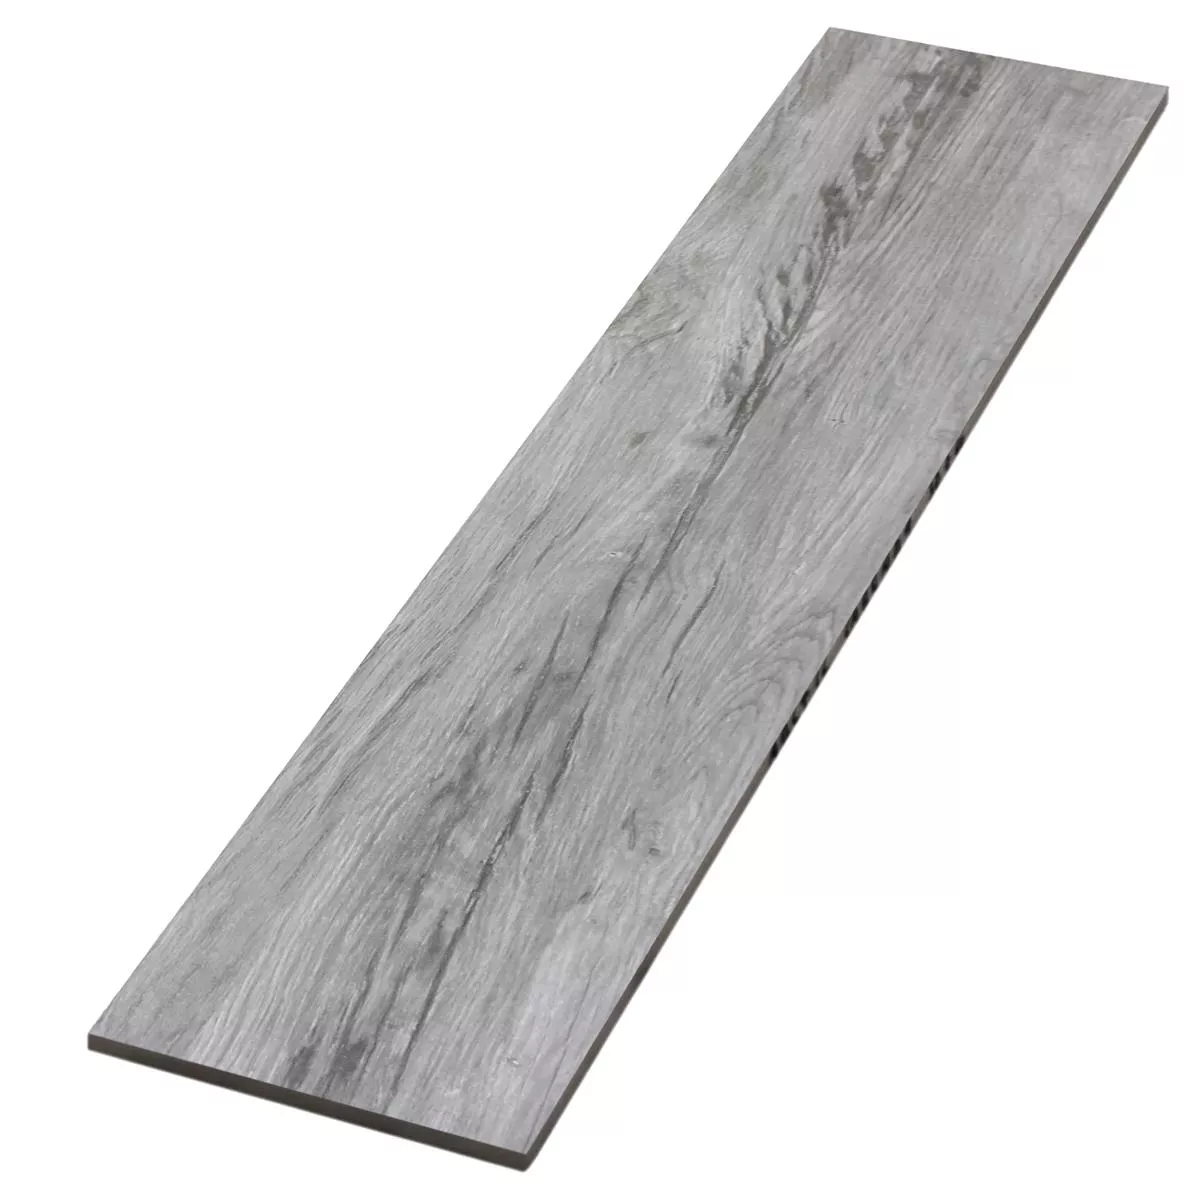 Floor Tiles Elmwood Wood Optic 20x120cm Grey